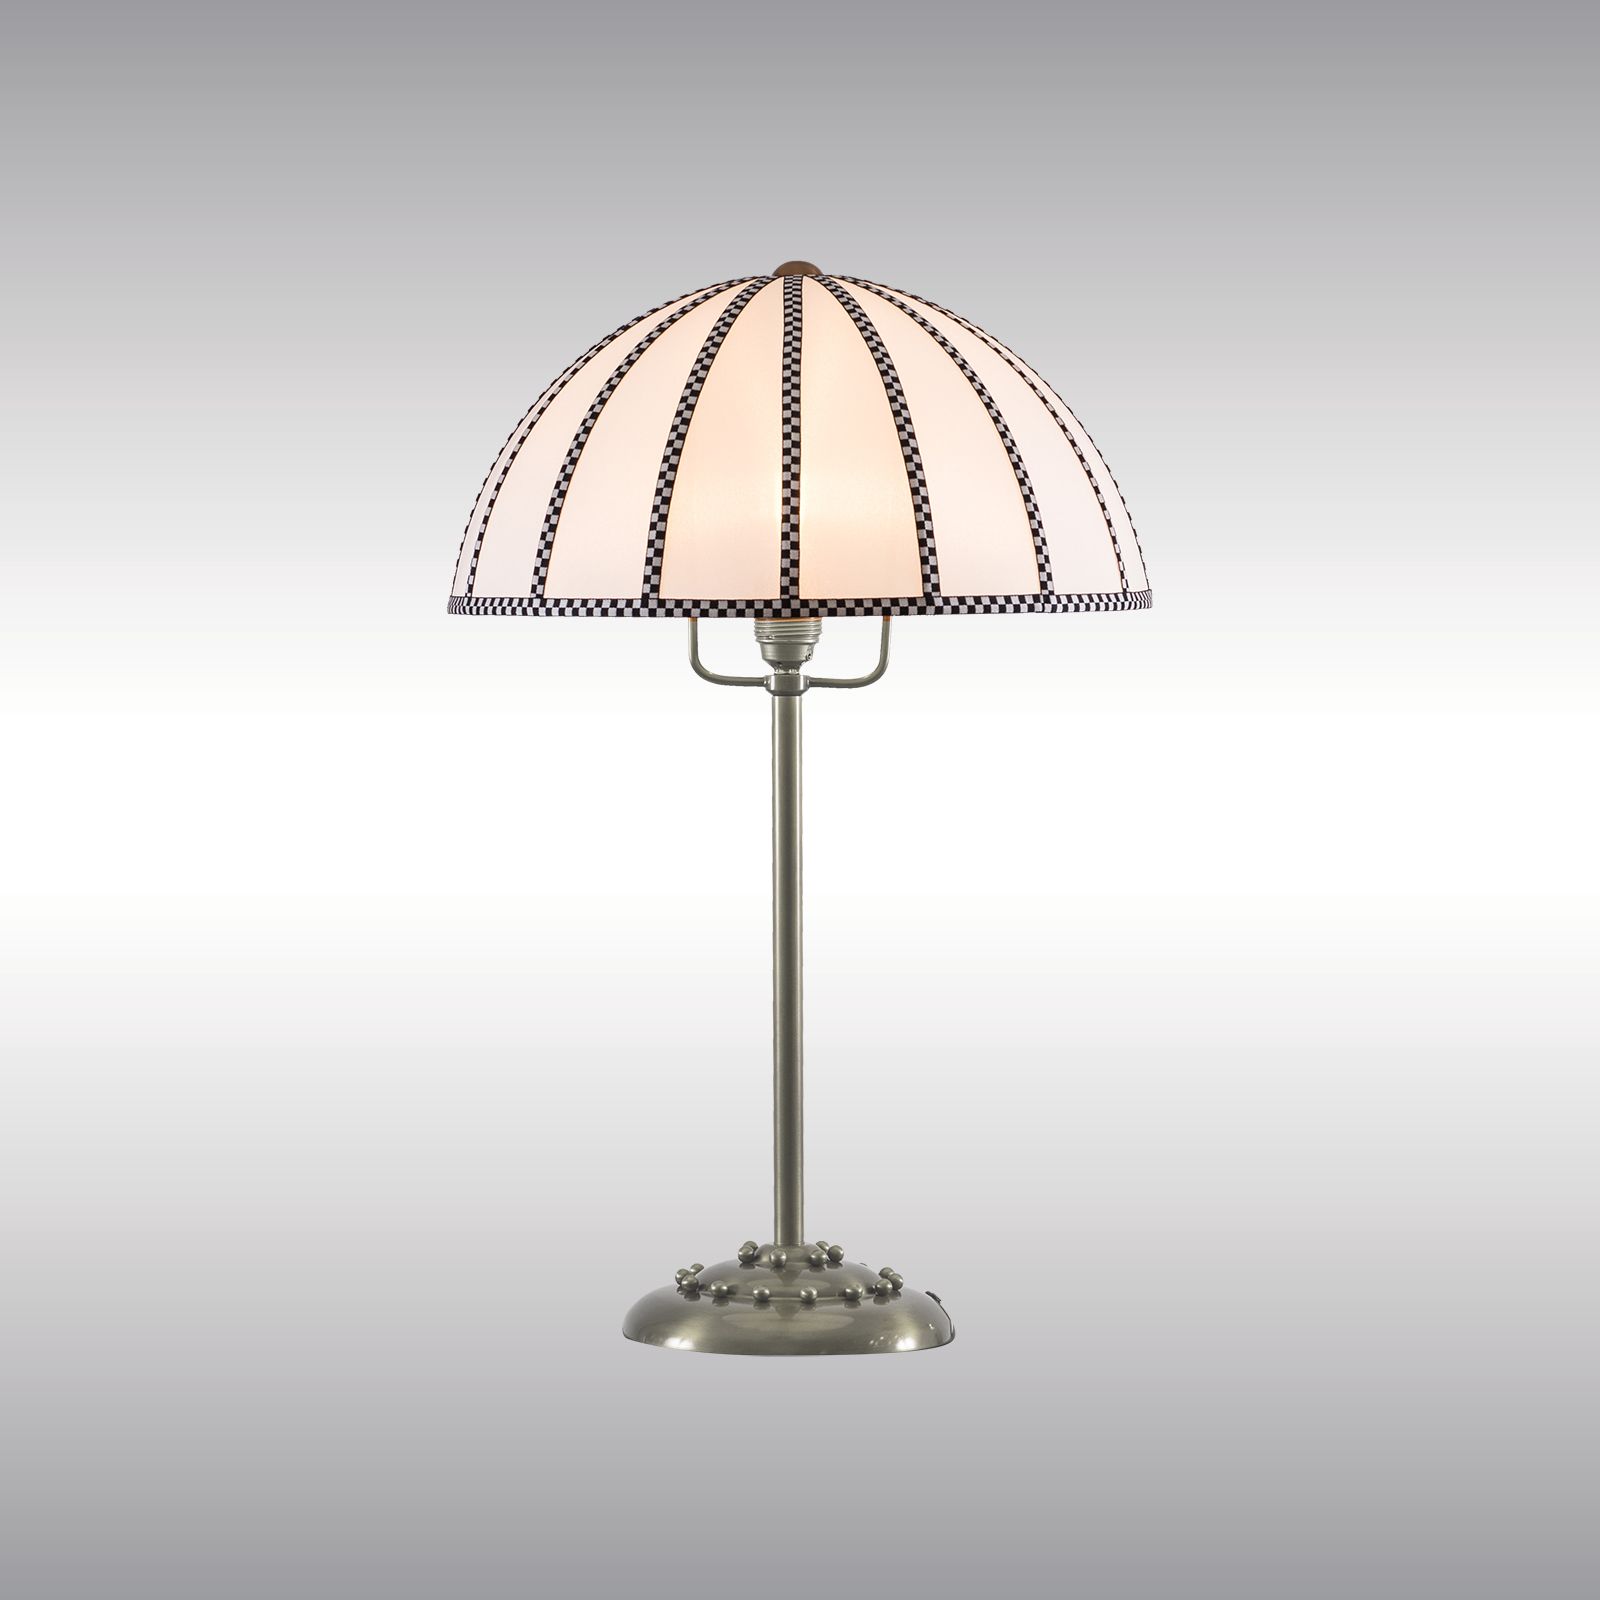 WOKA LAMPS VIENNA - OrderNr.: 20502|Josef Hoffmann and Wiener Werkstaeatte Lamp WW-S142 - Design: Josef Hoffmann